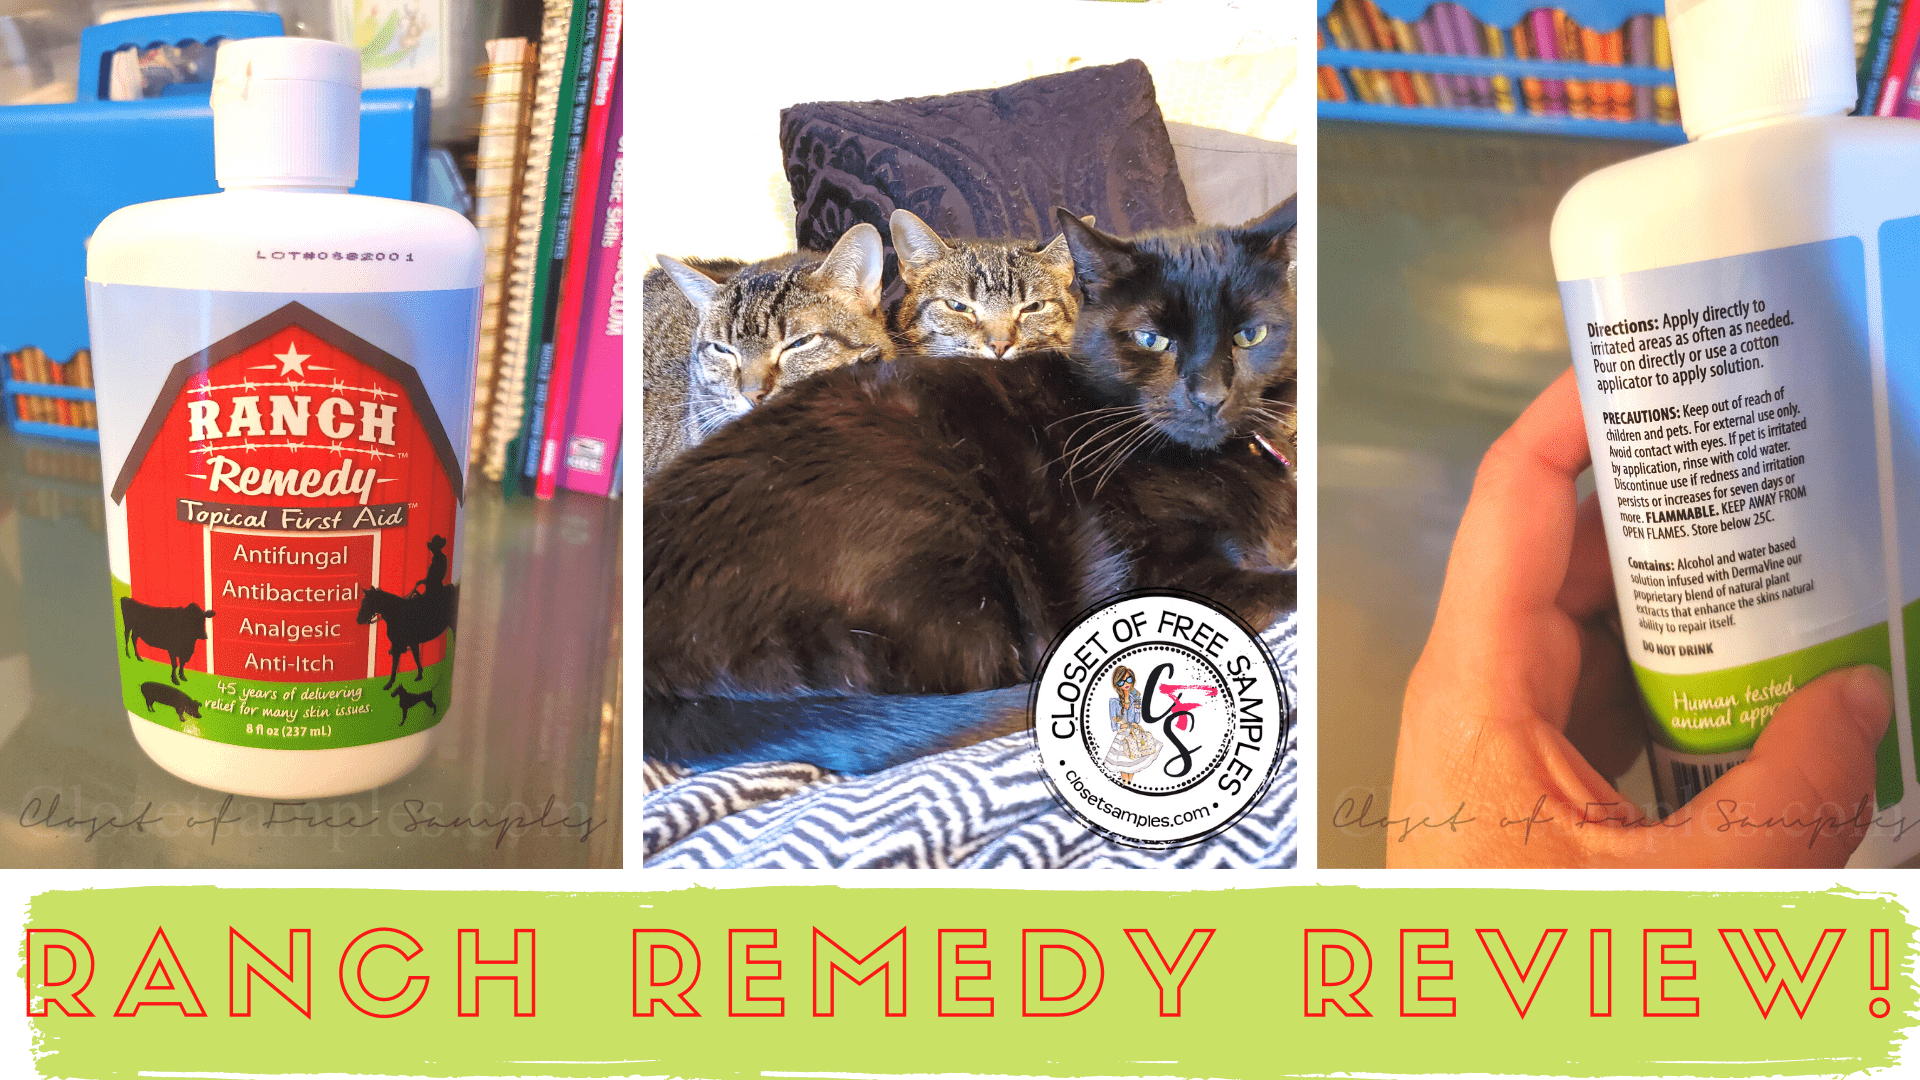 Ranch-Remedy-Review-Closetsamples-Pets.png